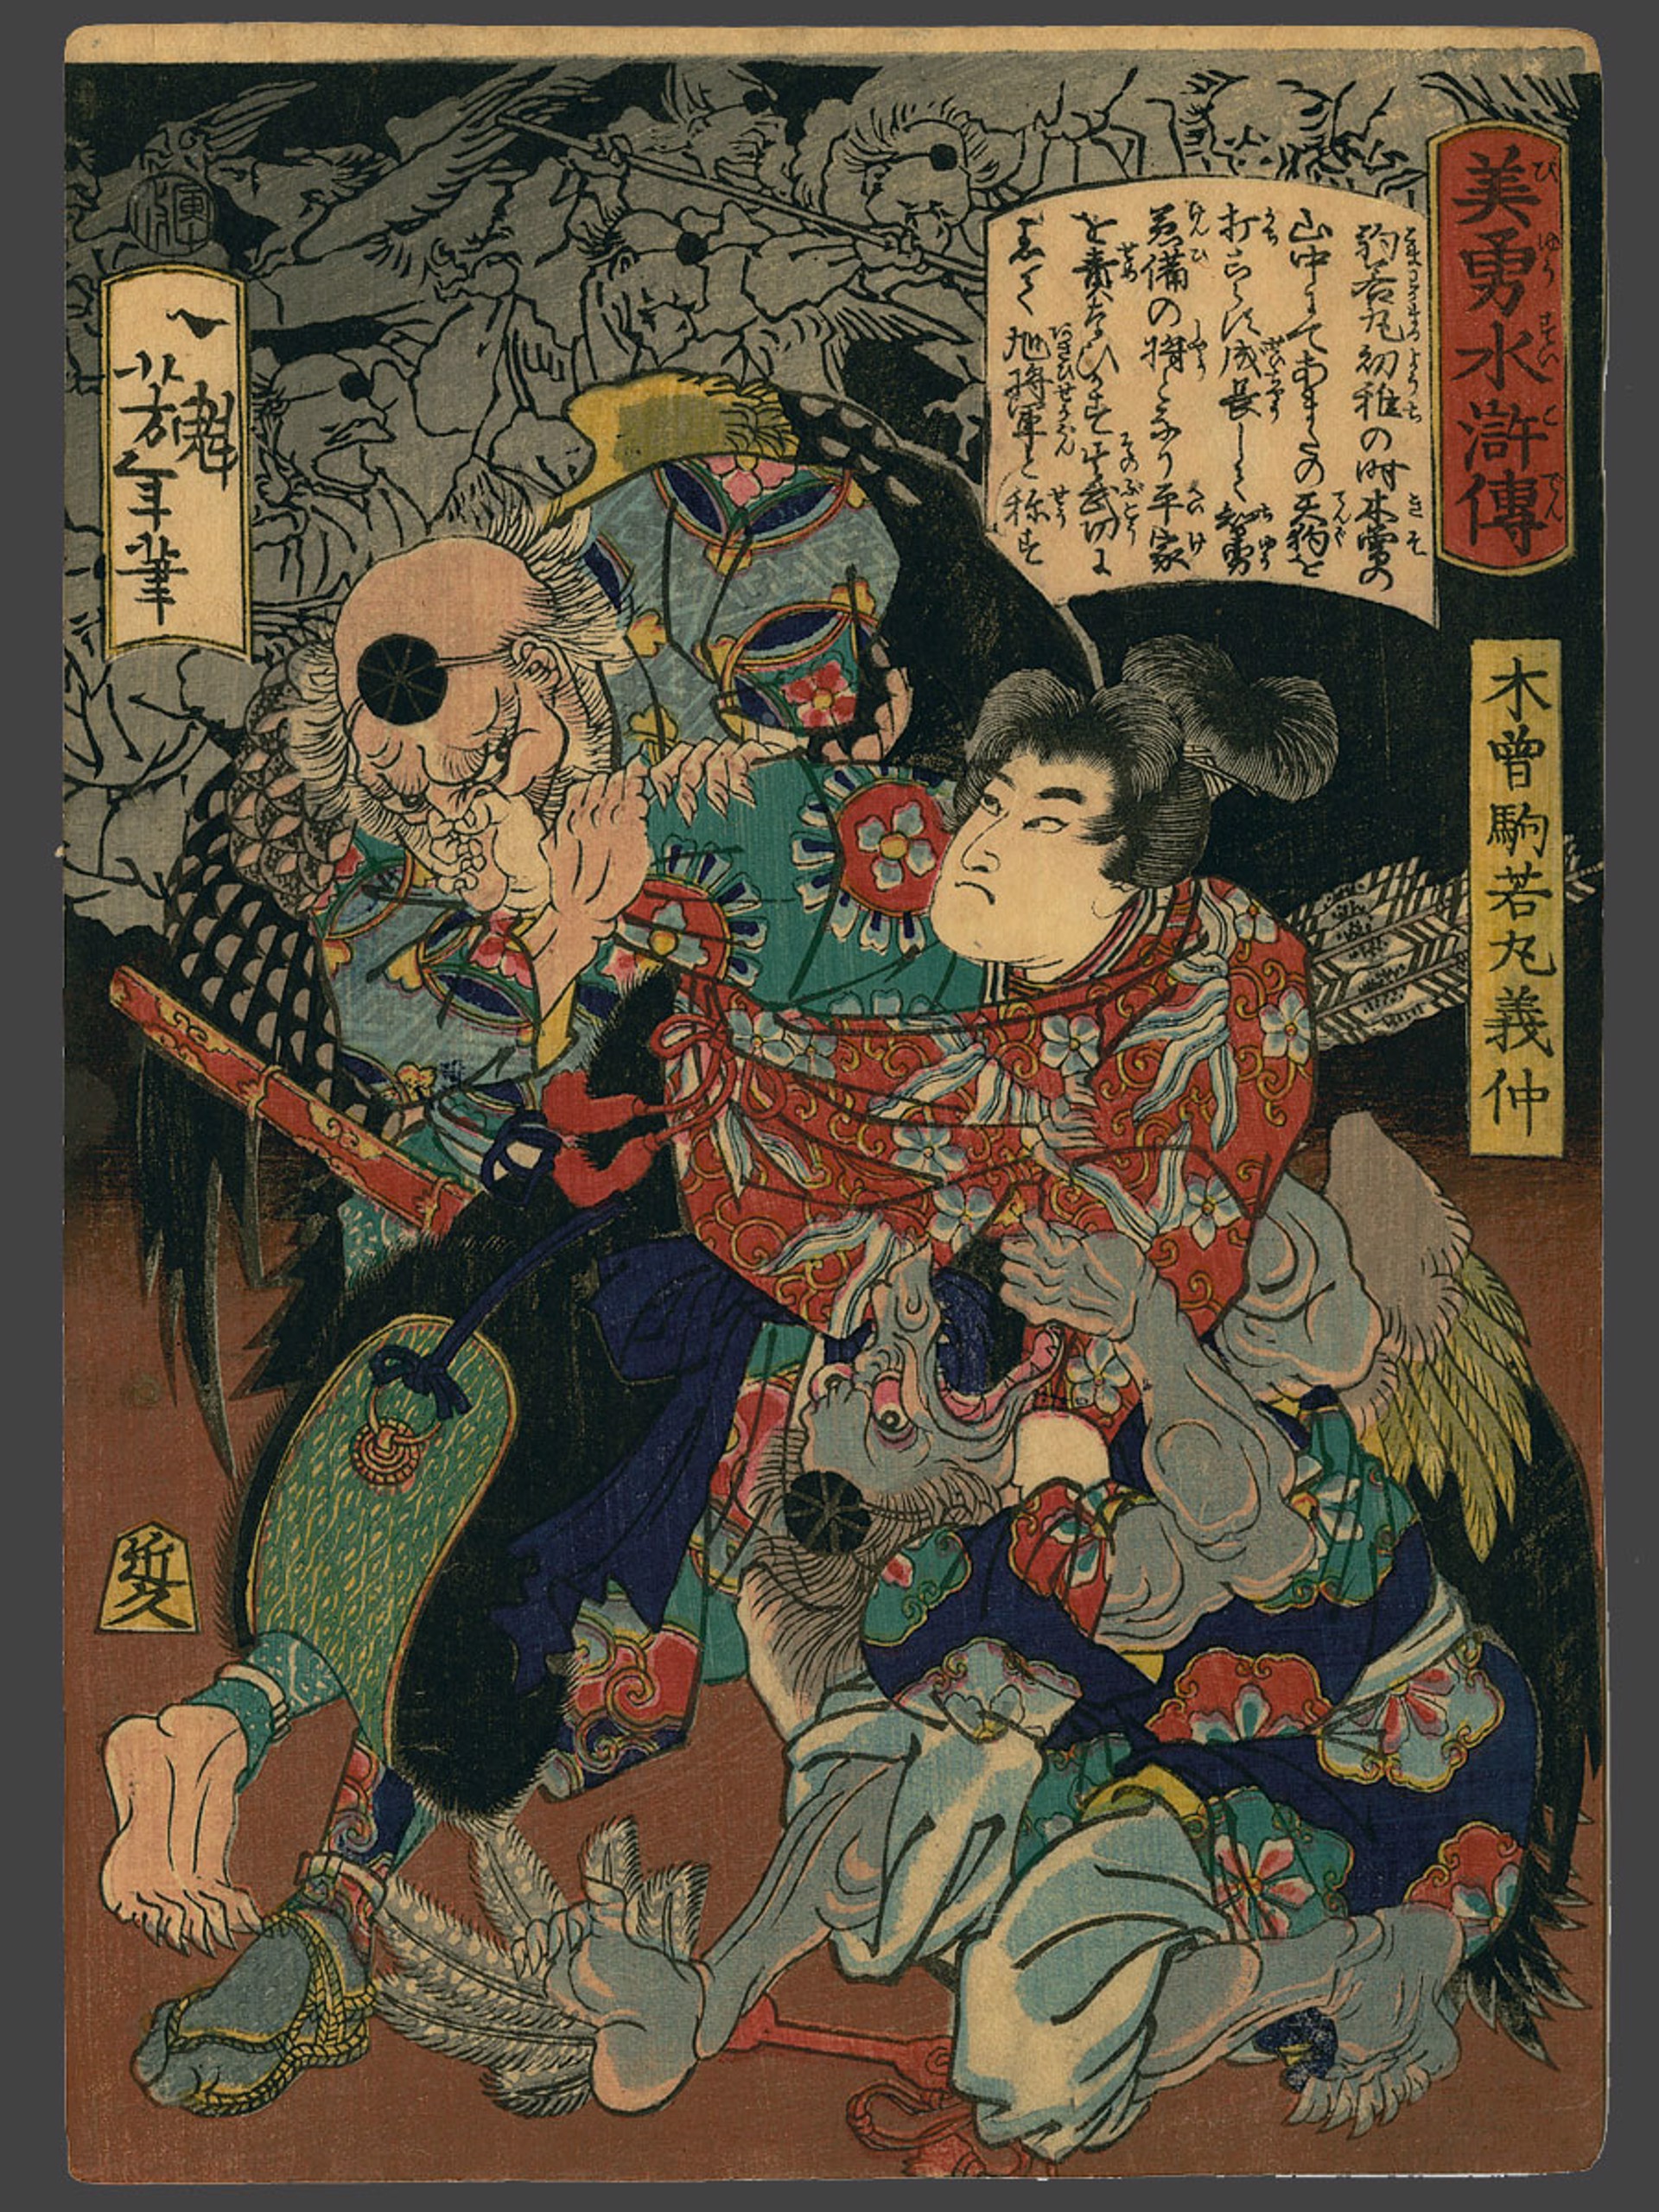 #12, Kiso Komo Wakamaru Yoshinaka Conquering the Tengu Biyu Suikoden (Beauty and Valor in Tales of the Water Margin) by Yoshitoshi